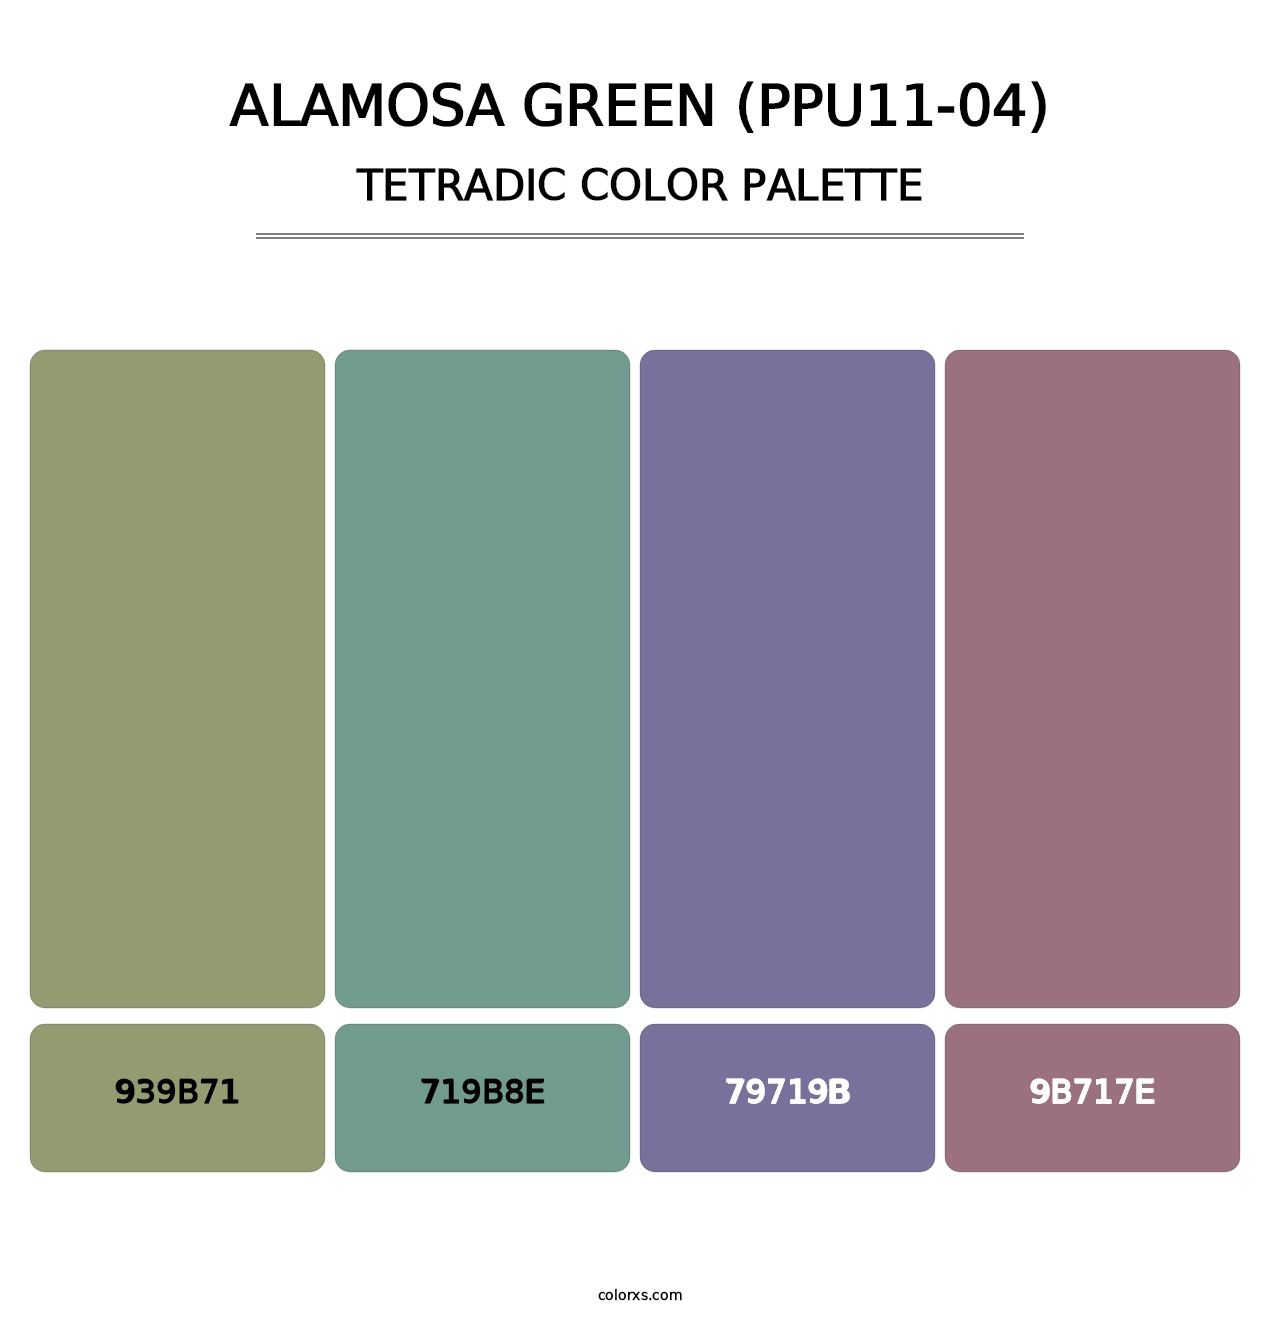 Alamosa Green (PPU11-04) - Tetradic Color Palette